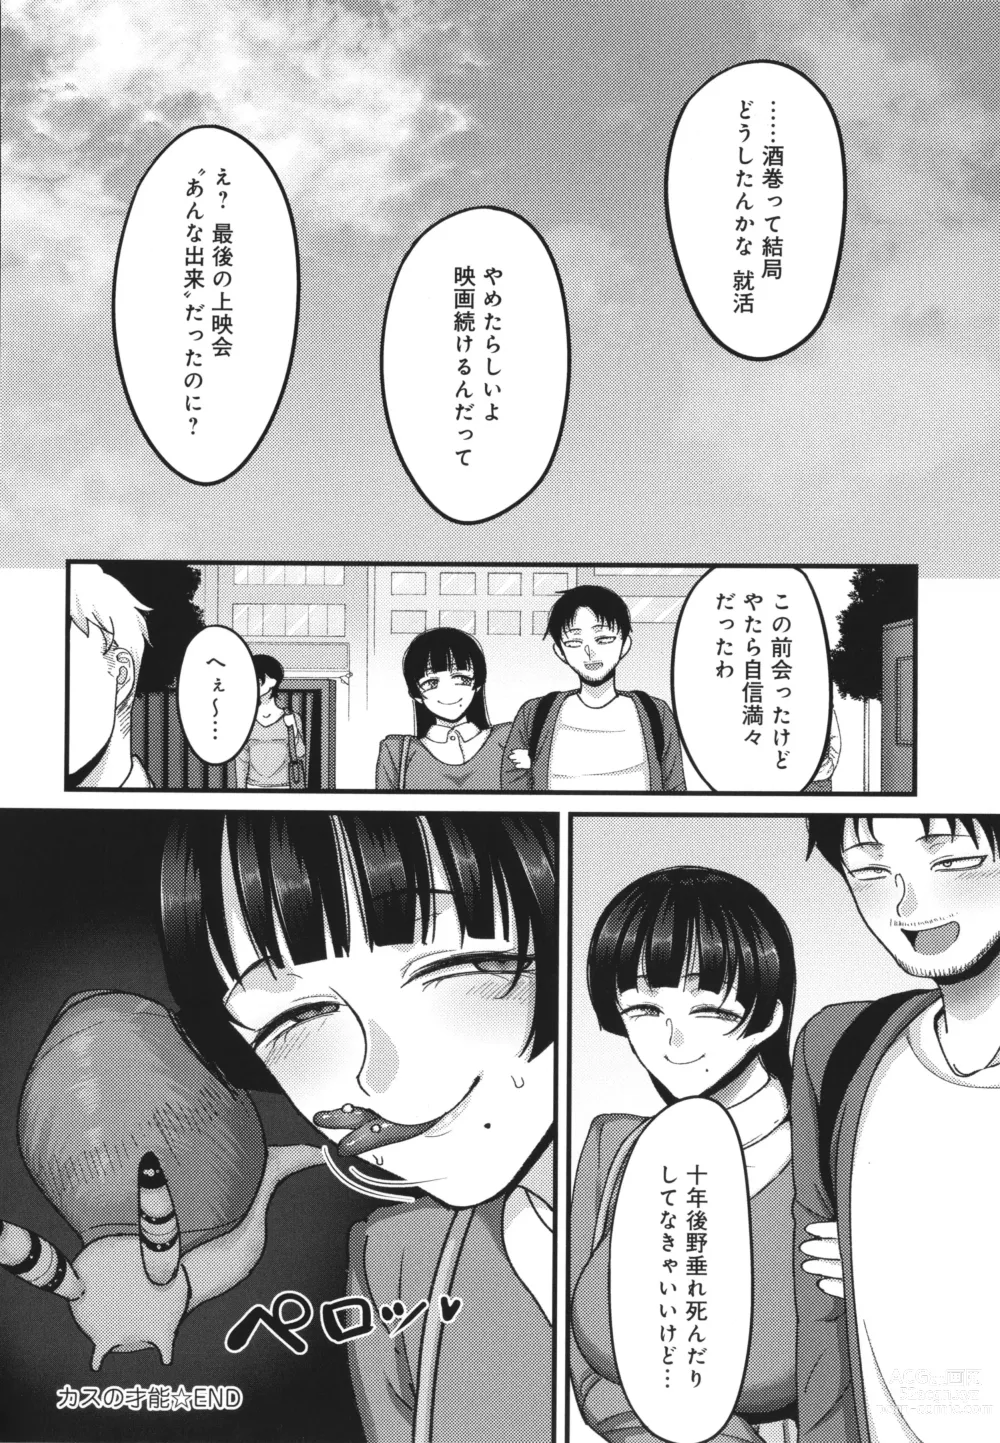 Page 201 of manga Nani Miten da yo! - What are you looking at?